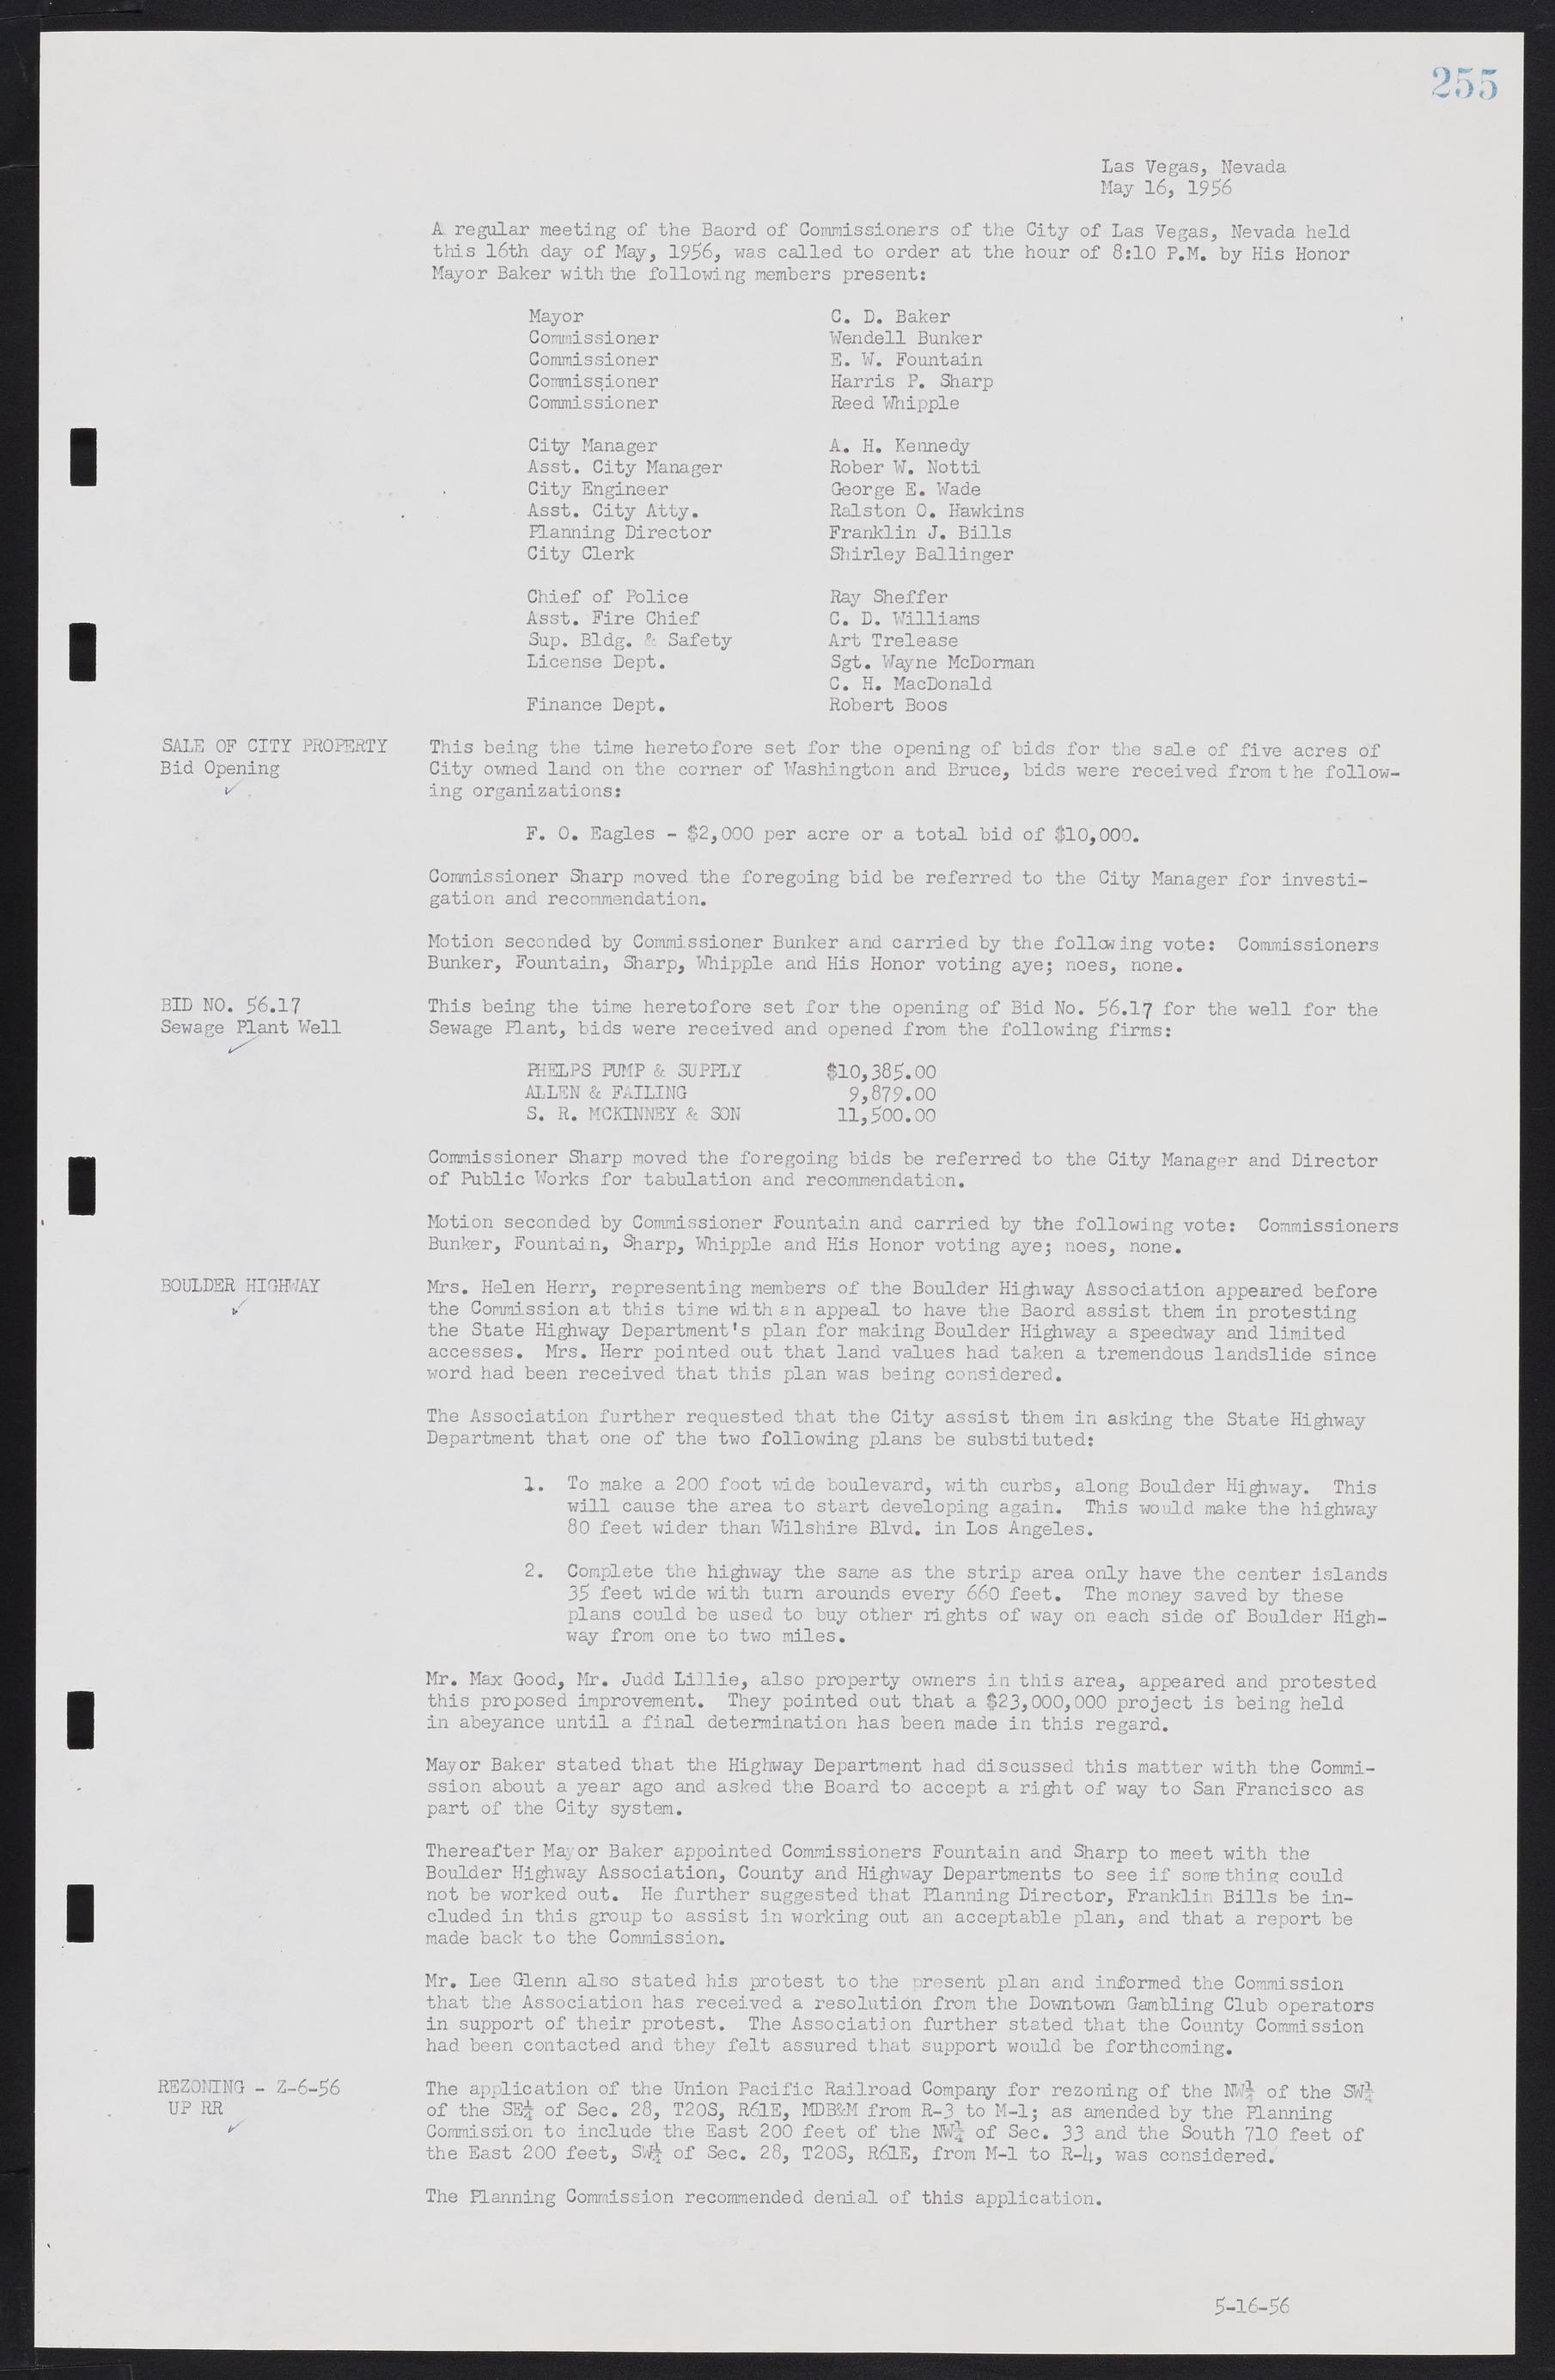 Las Vegas City Commission Minutes, September 21, 1955 to November 20, 1957, lvc000010-275